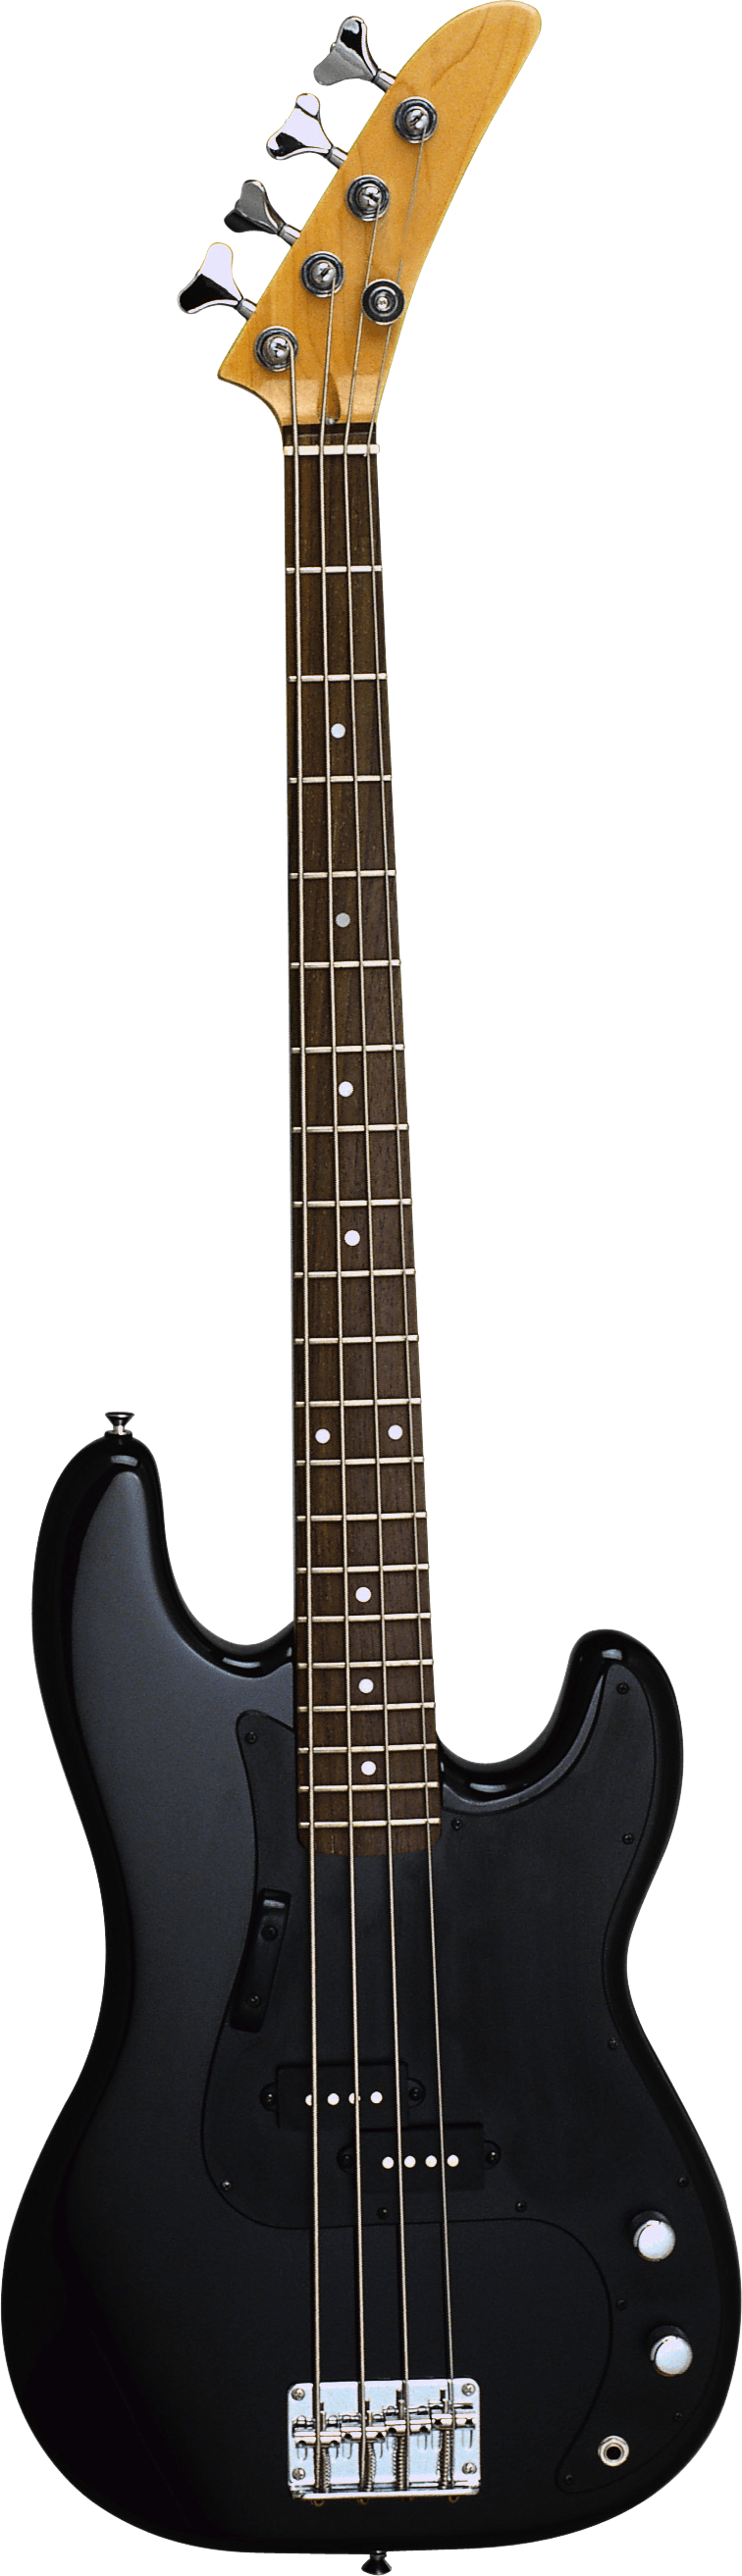 Black Electric Bass Guitar PNG